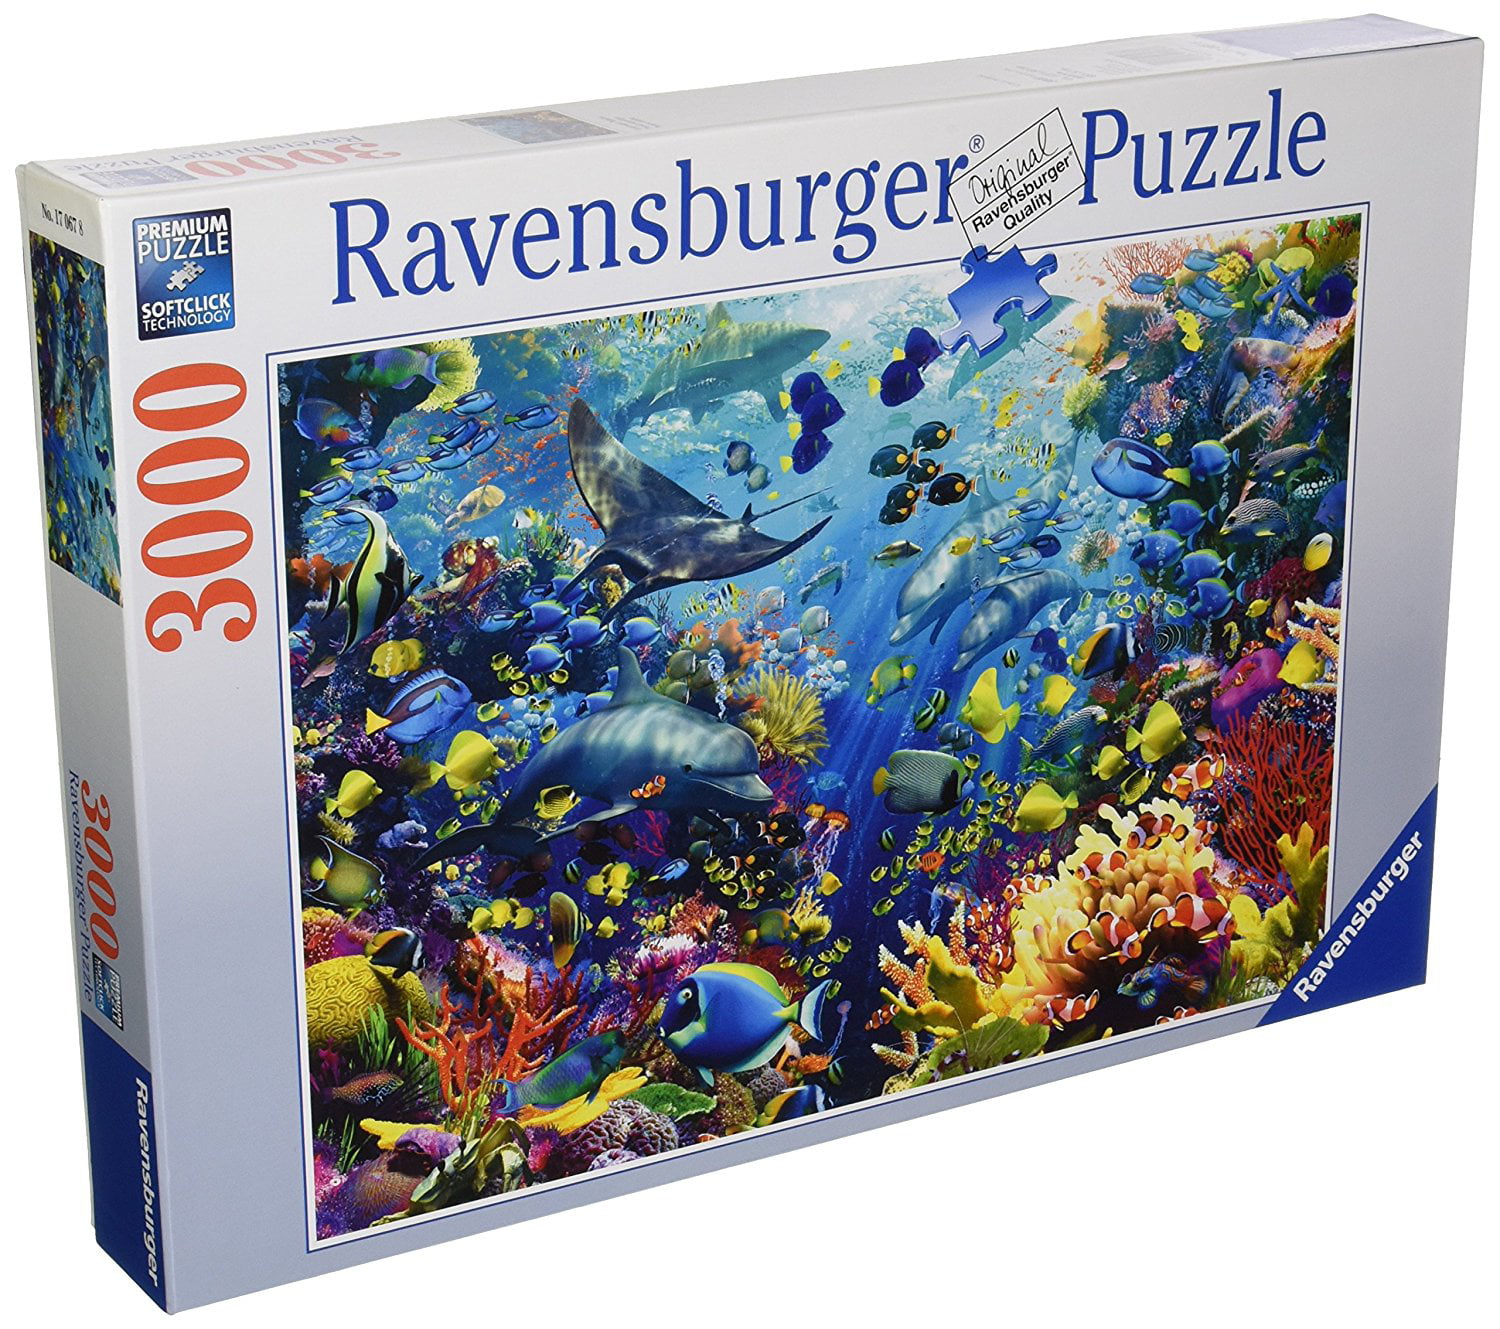 bias Ancient times Polishing Underwater Paradise - 3000 Piece Jigsaw Puzzle - Ravensburger - Walmart.com